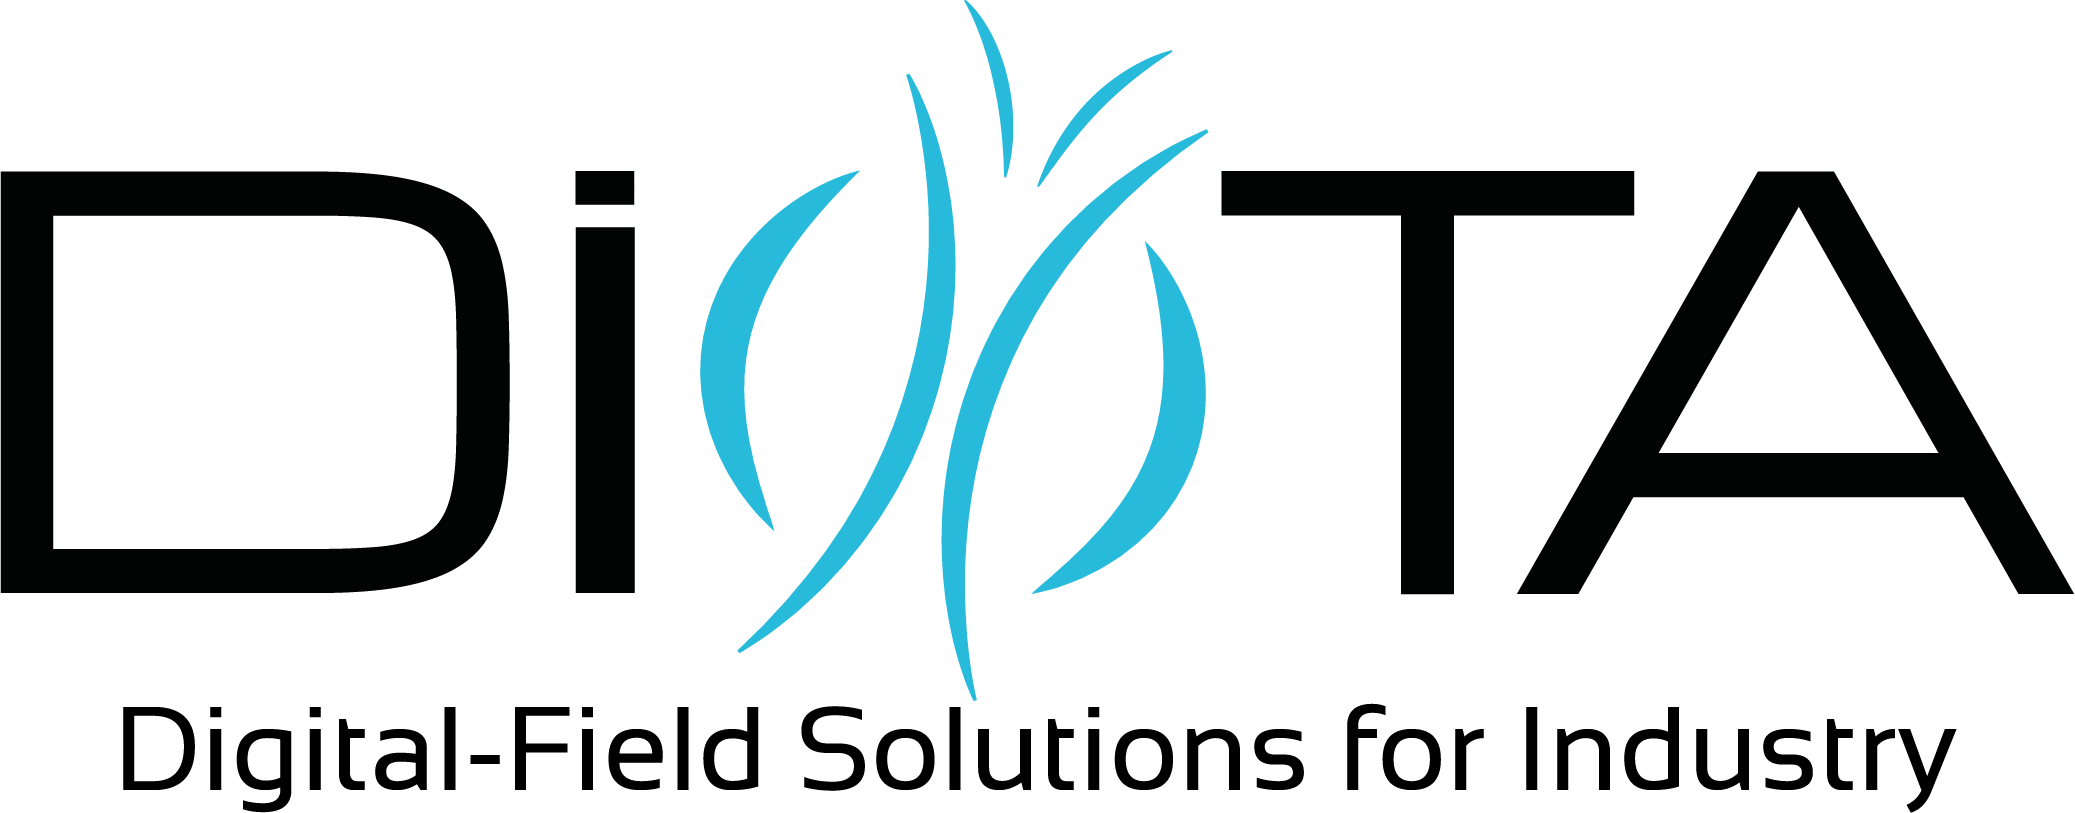 Logo Diota